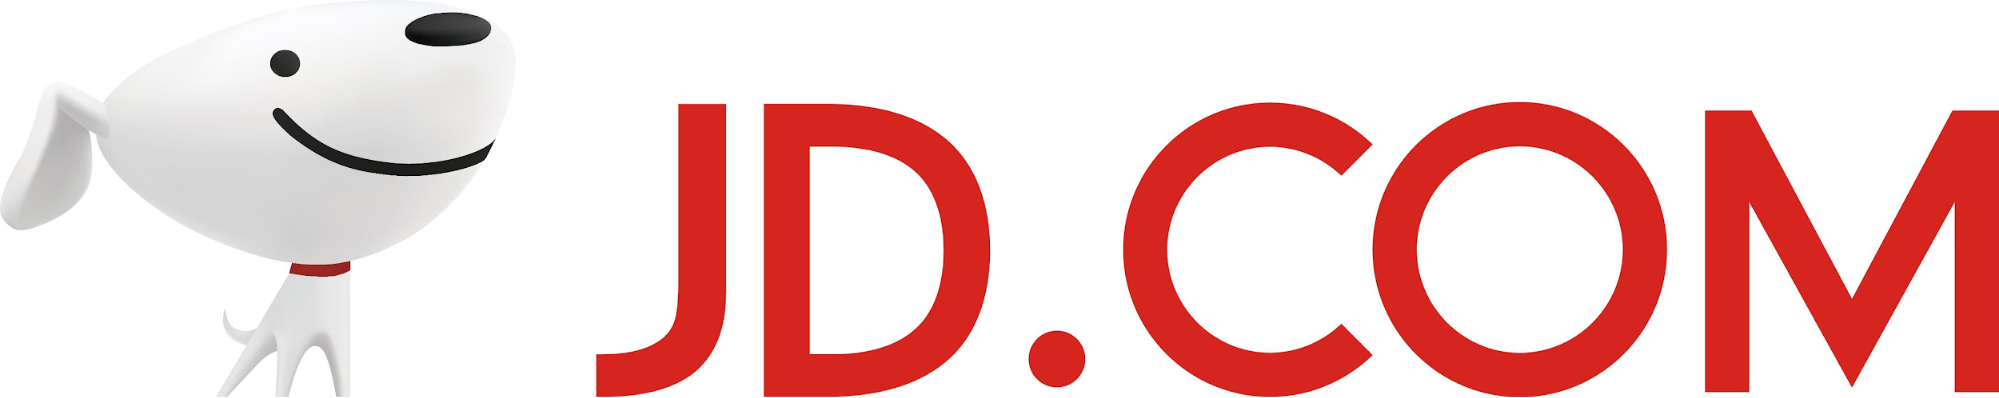 JD.com лого. Логотипы компаний. Jingdong Mall логотип. JD Global logo. Tanukishop com